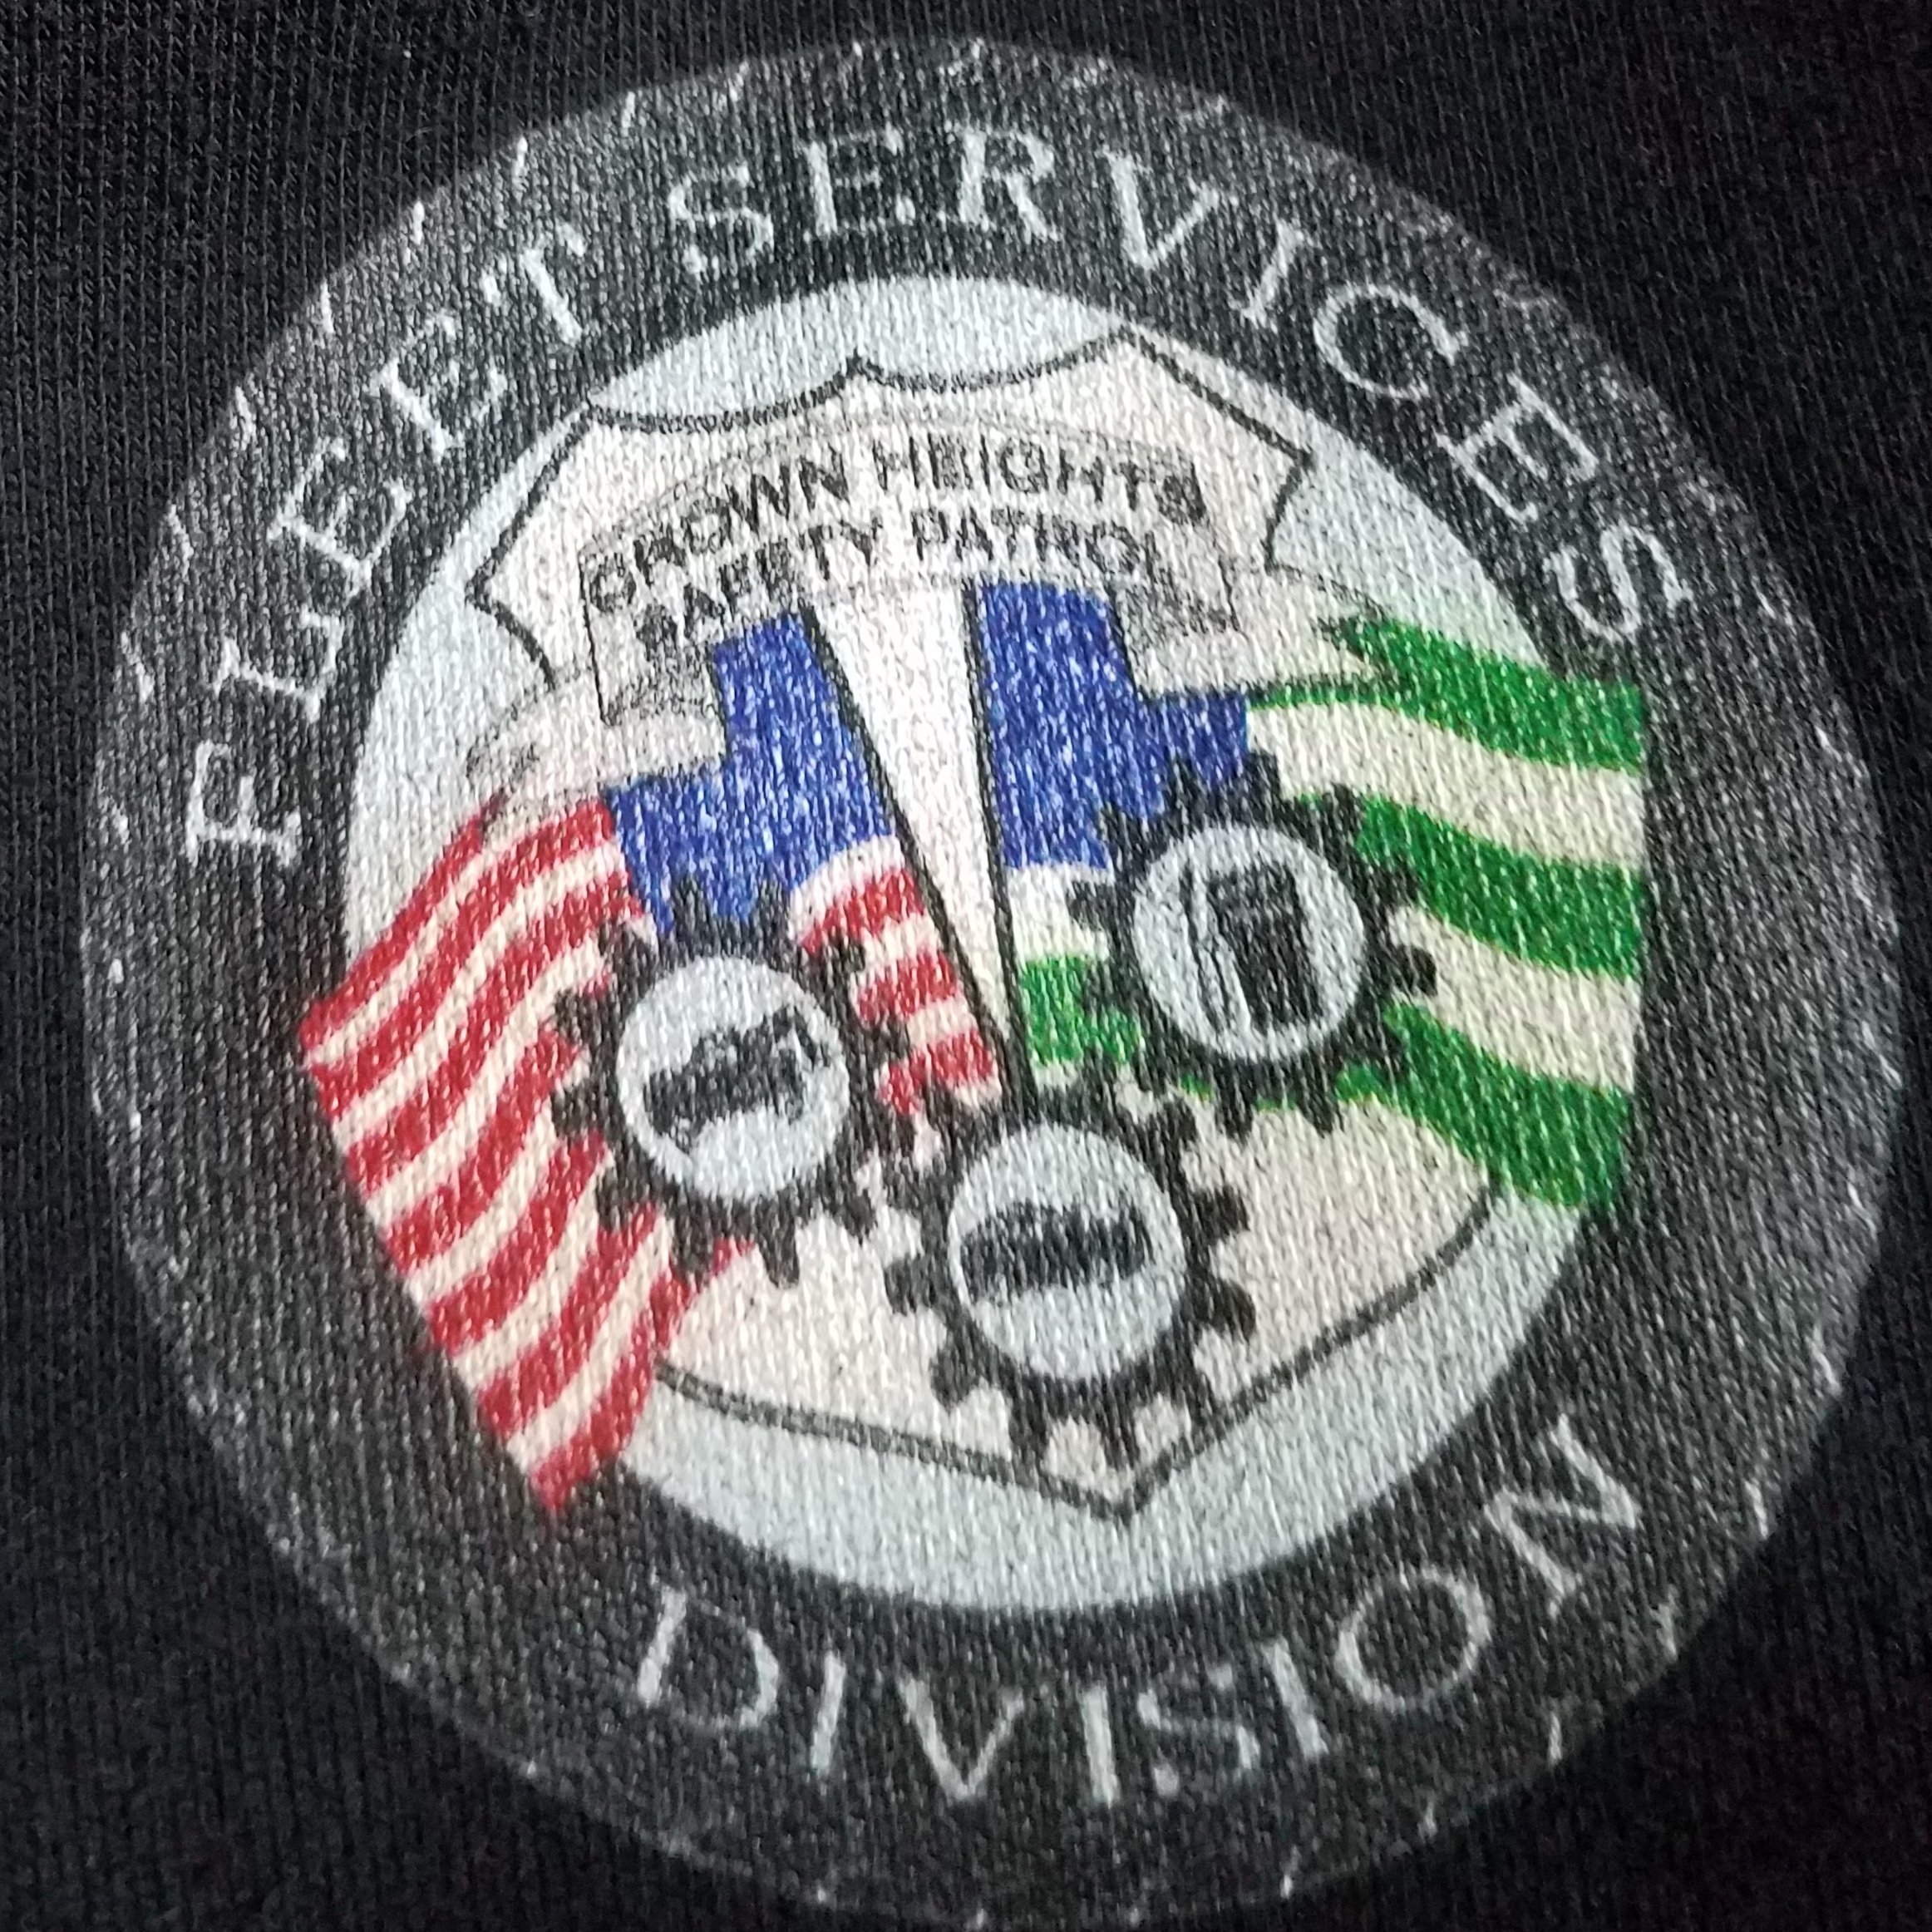 The Fleet Service's Division of @Chspshmira. We service the fleet of CHSP. This account is not monitored 24/7, Do Not Report Emergencies on Twitter!